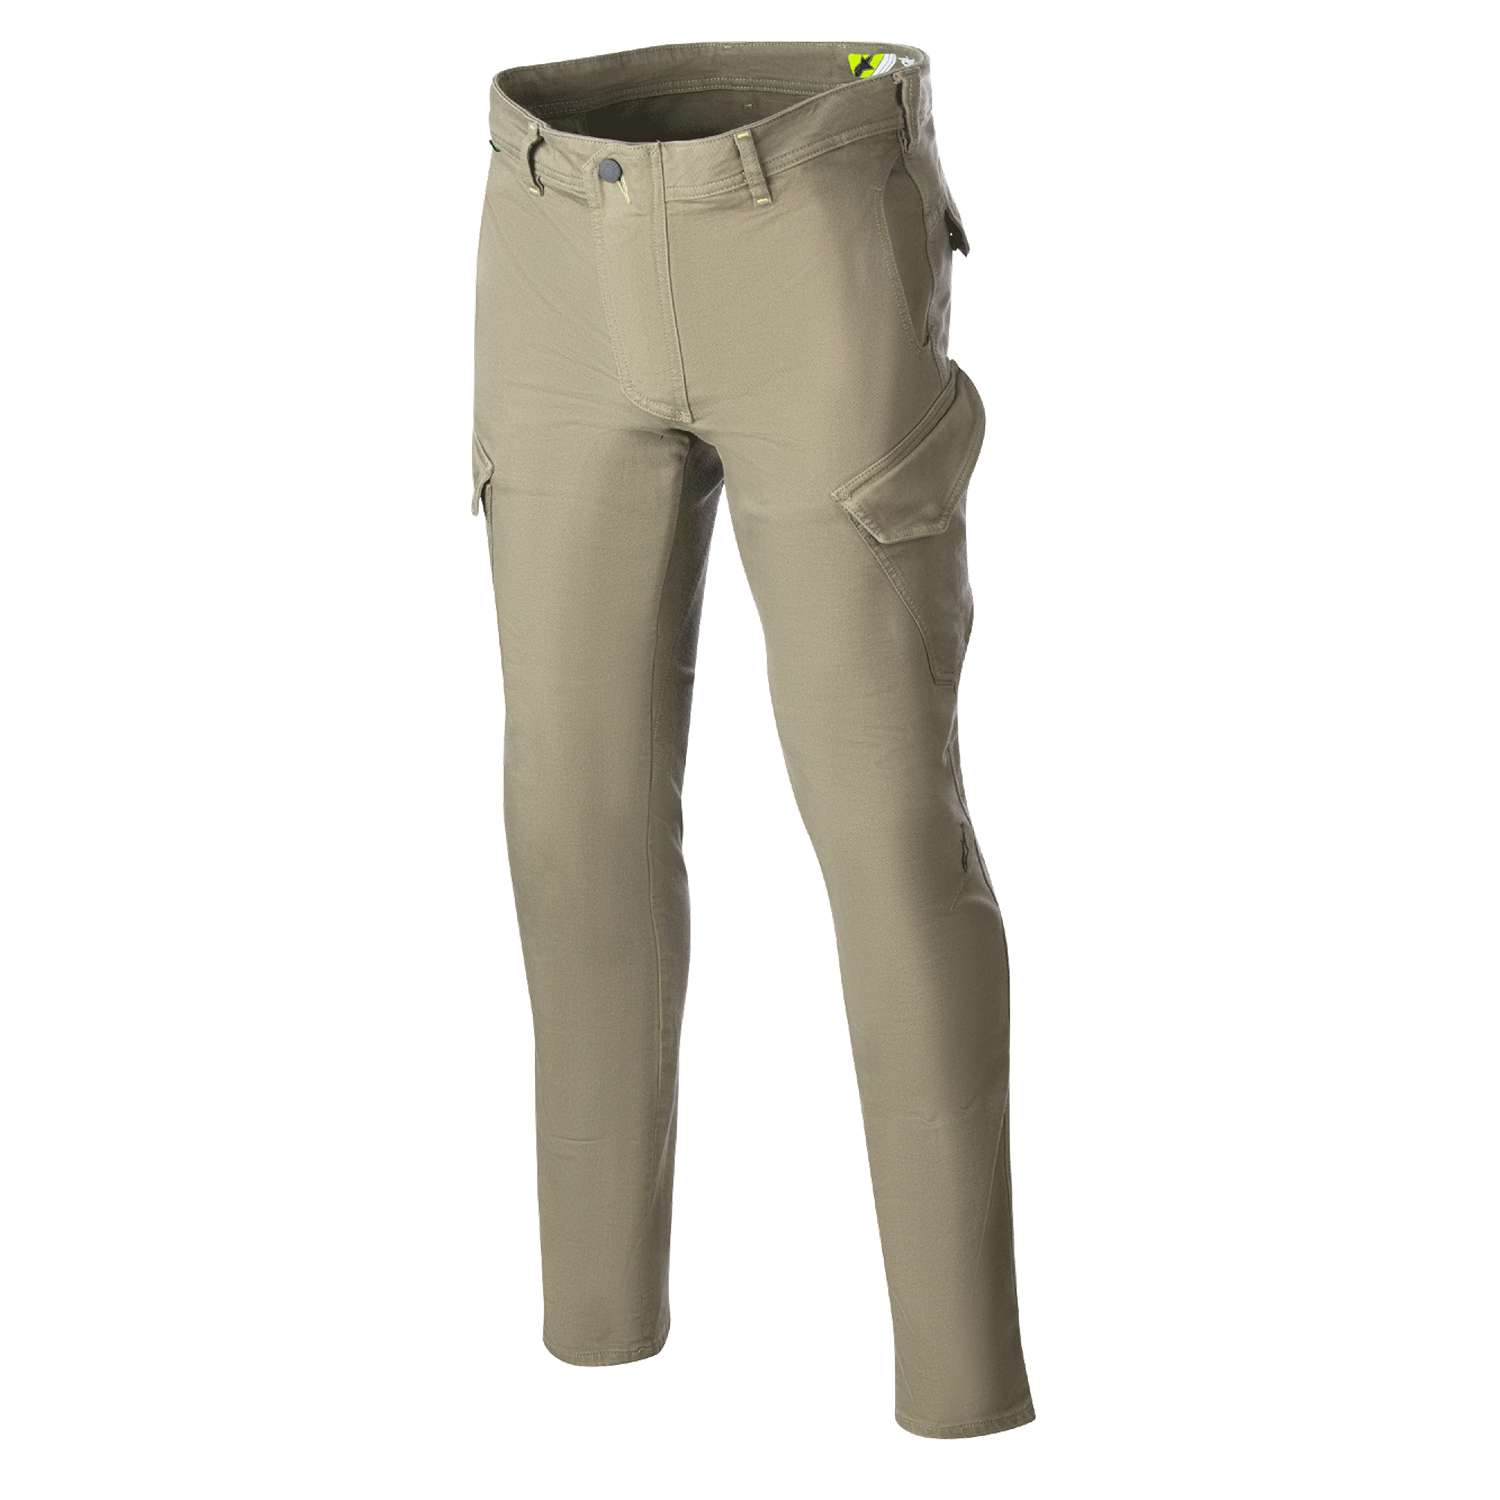 Image of Alpinestars Caliber Slim Fit Tech Riding Pants Military Green Size 28 ID 8059347165202